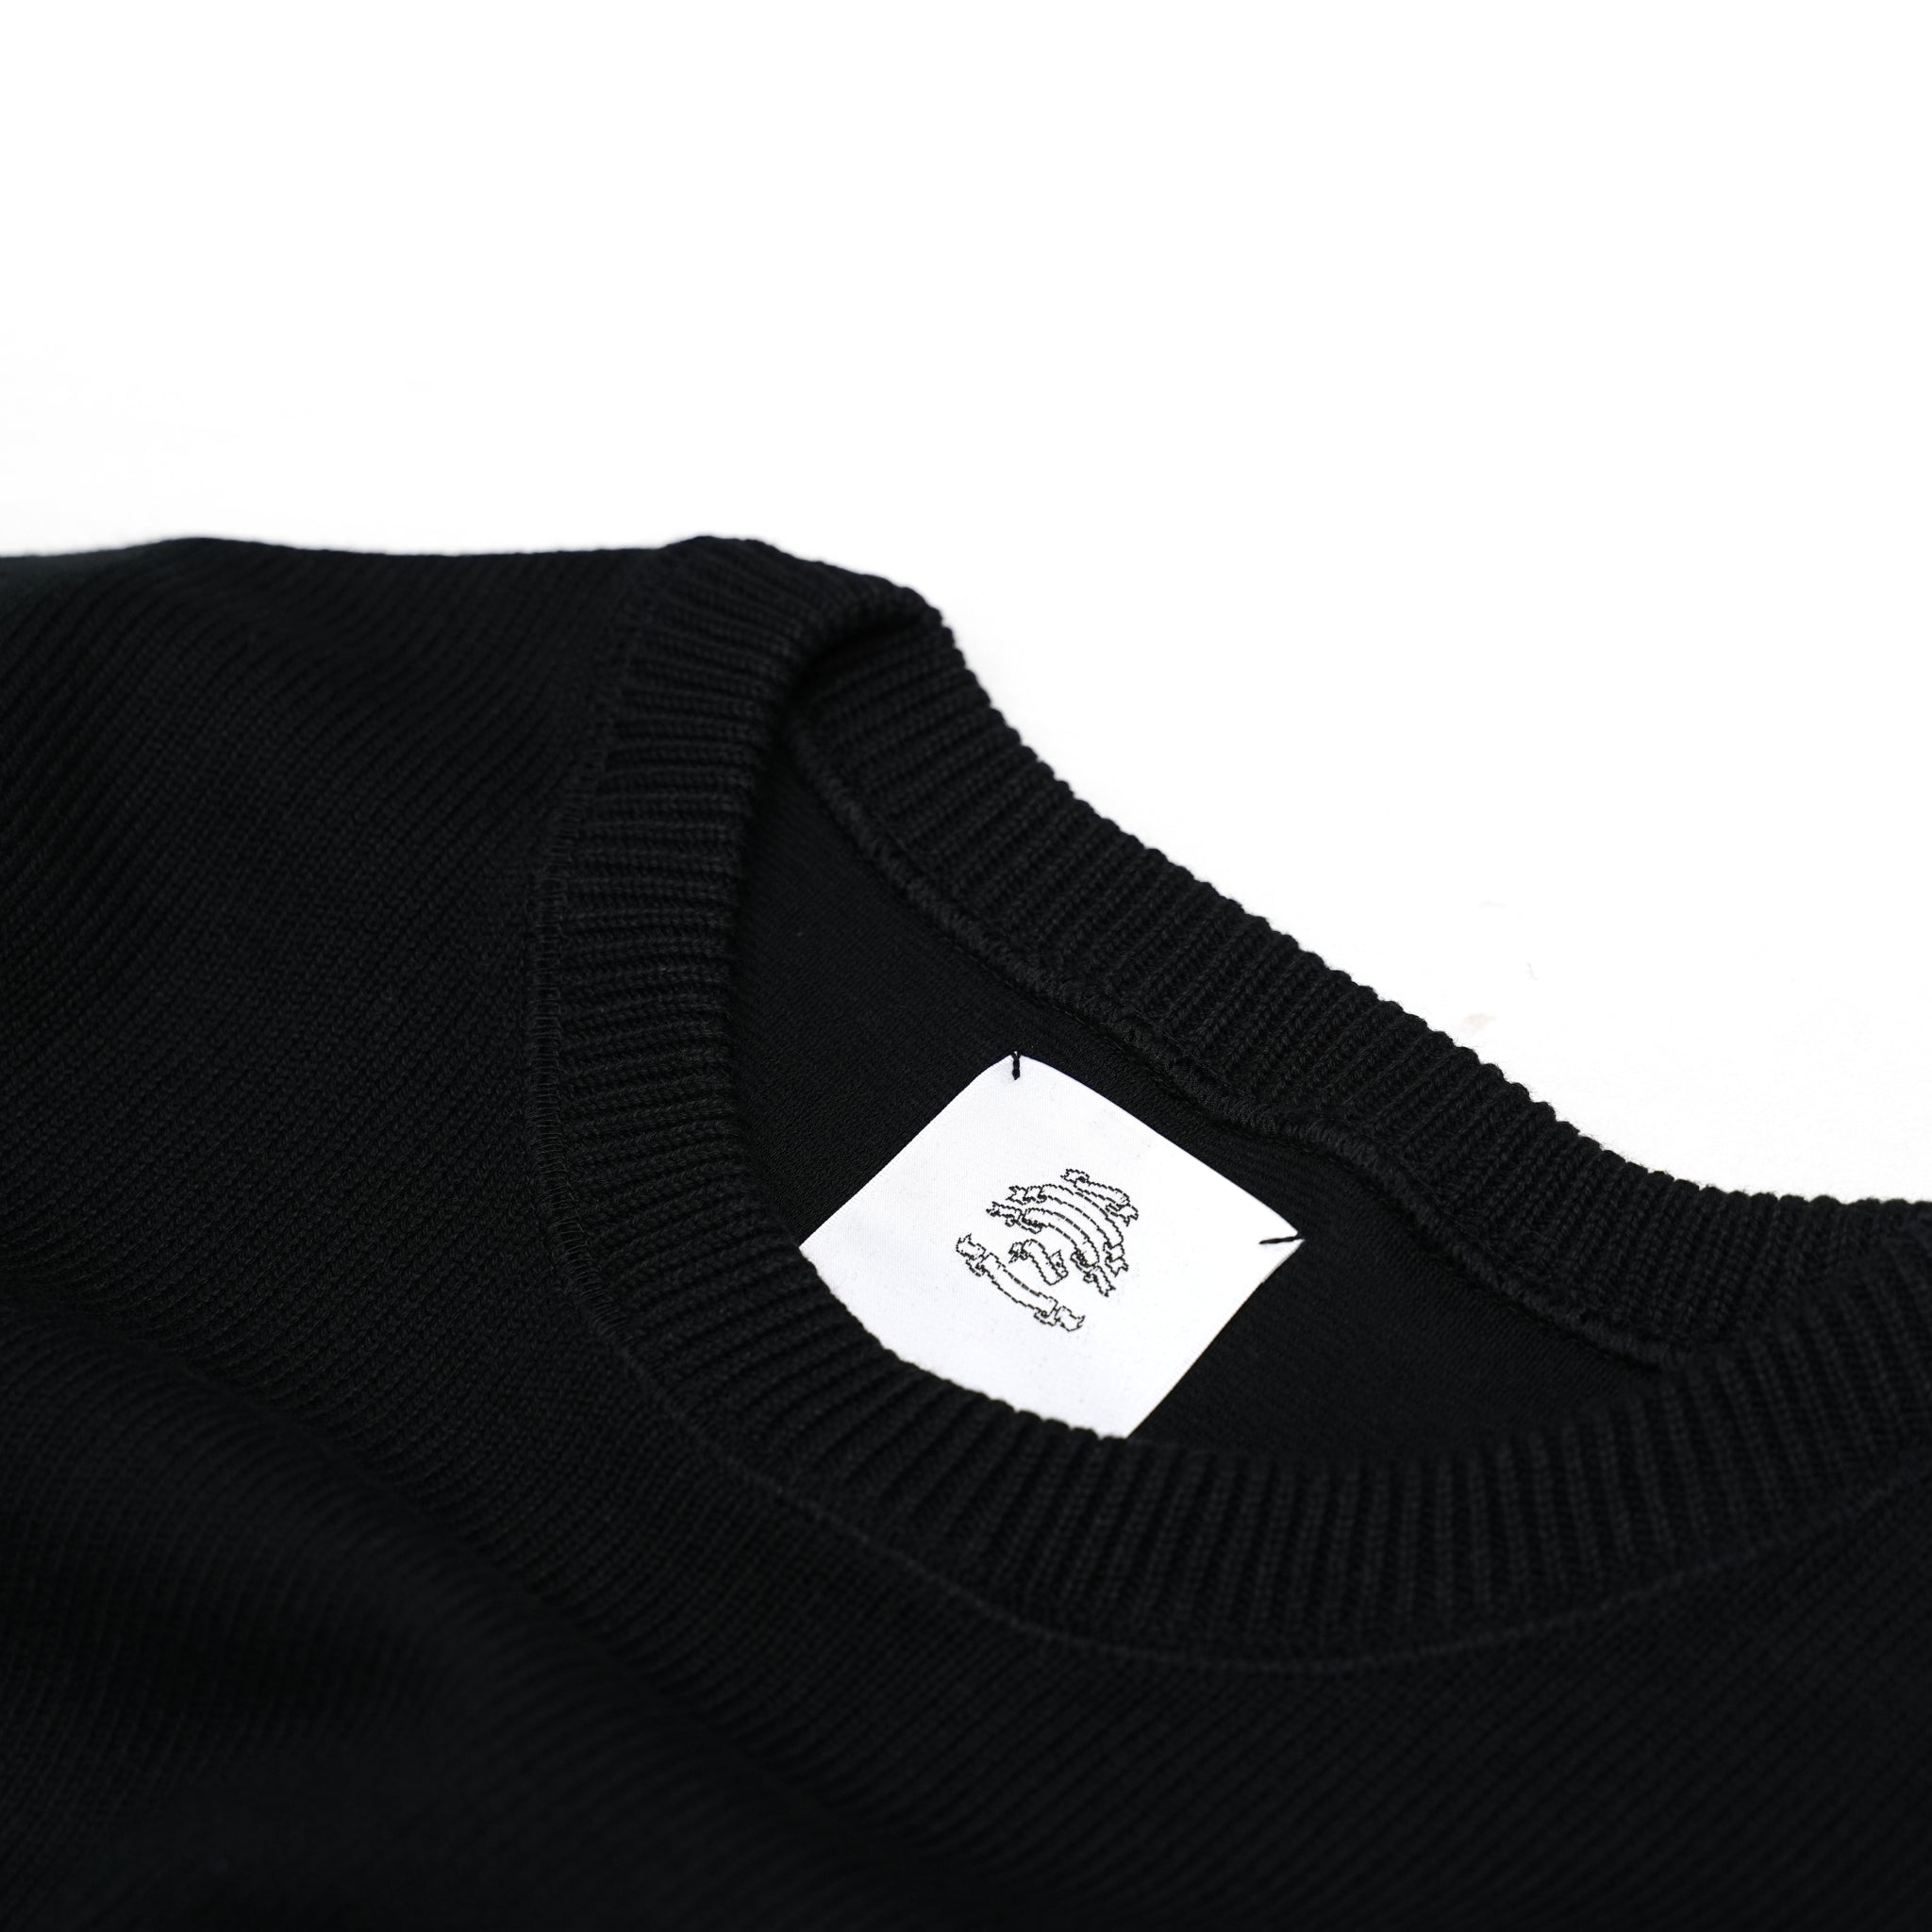 No:SF*IA-01 | Name:勇者たち Knit Sweater | Color:Black【浅野いにお